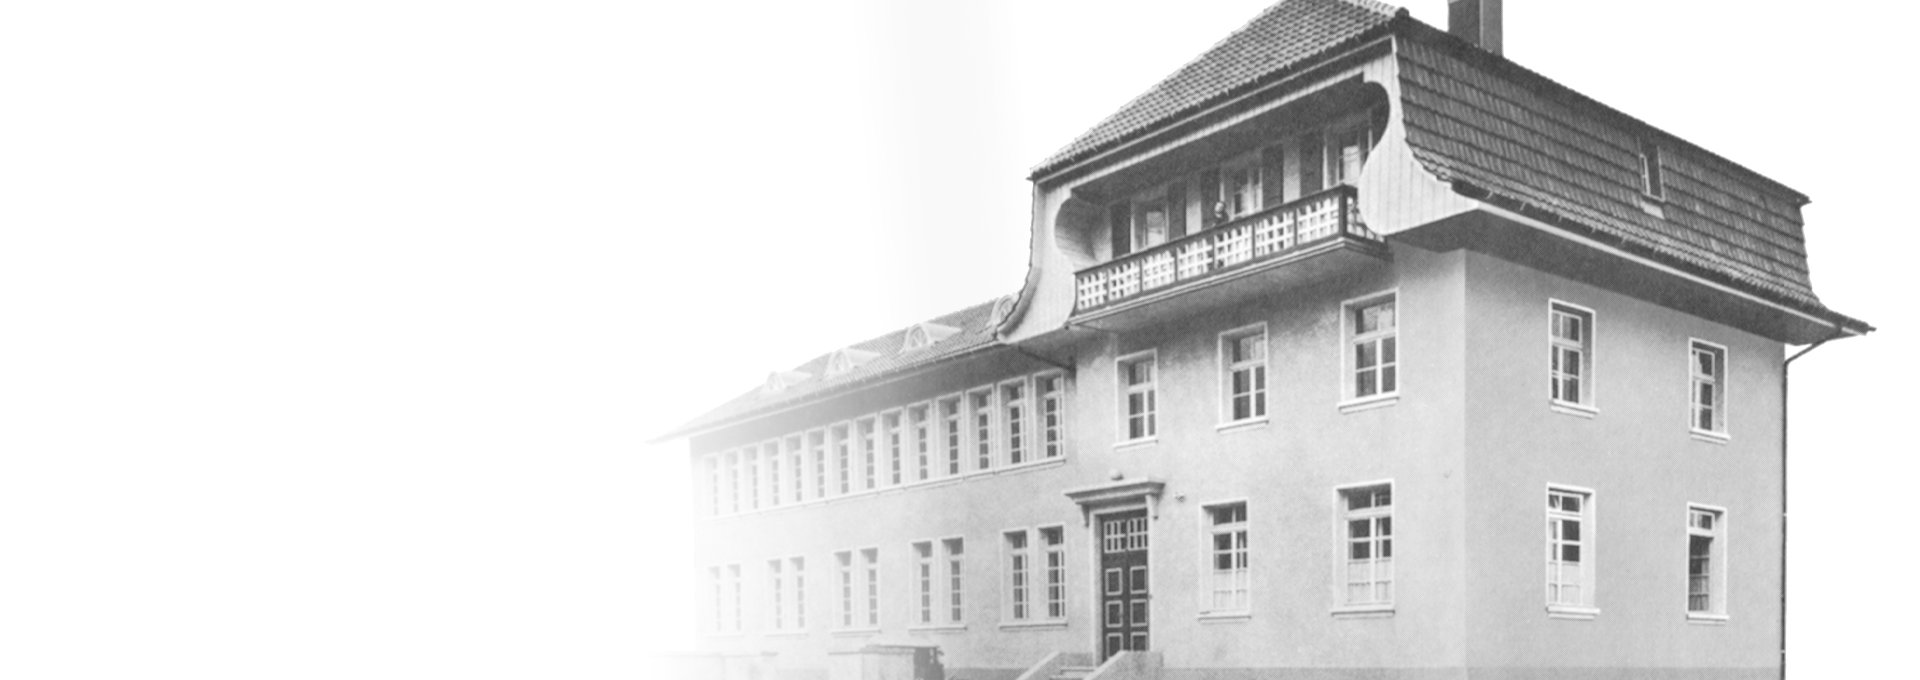 Old black and white photo of Bernafon's first factory in Flamatt, near Bern, Switzerland, 1925